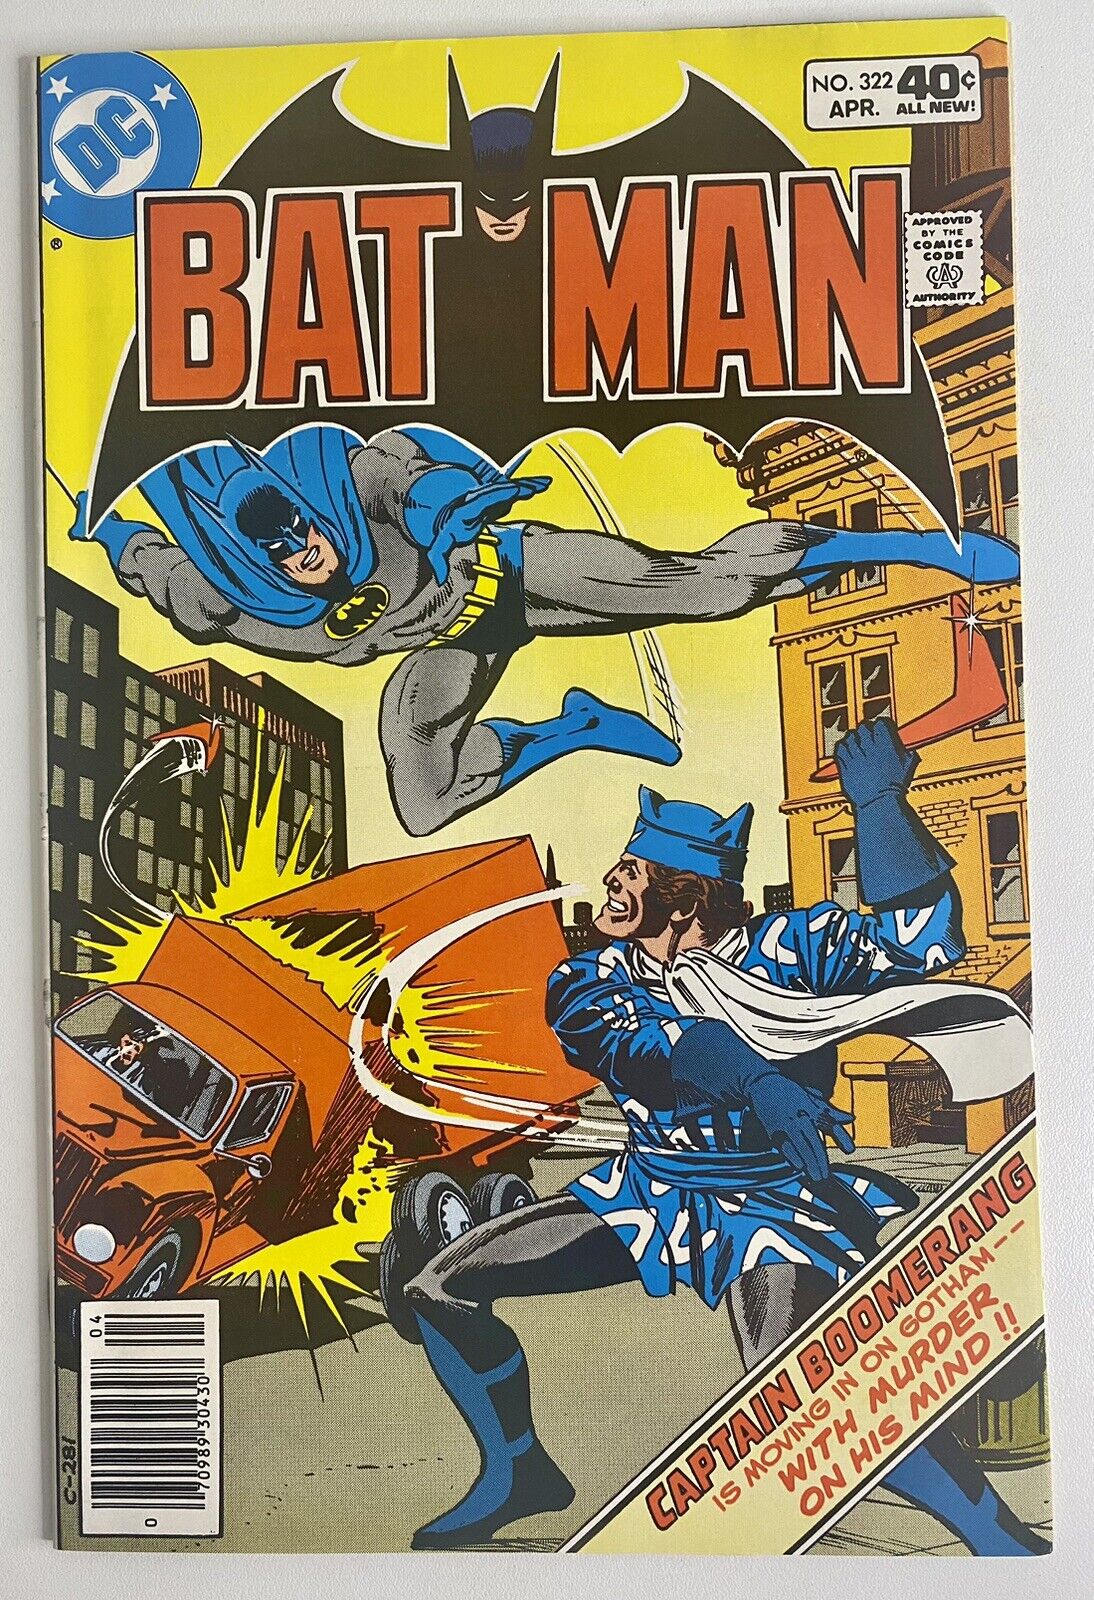 Batman #322 - Captain Boomerang